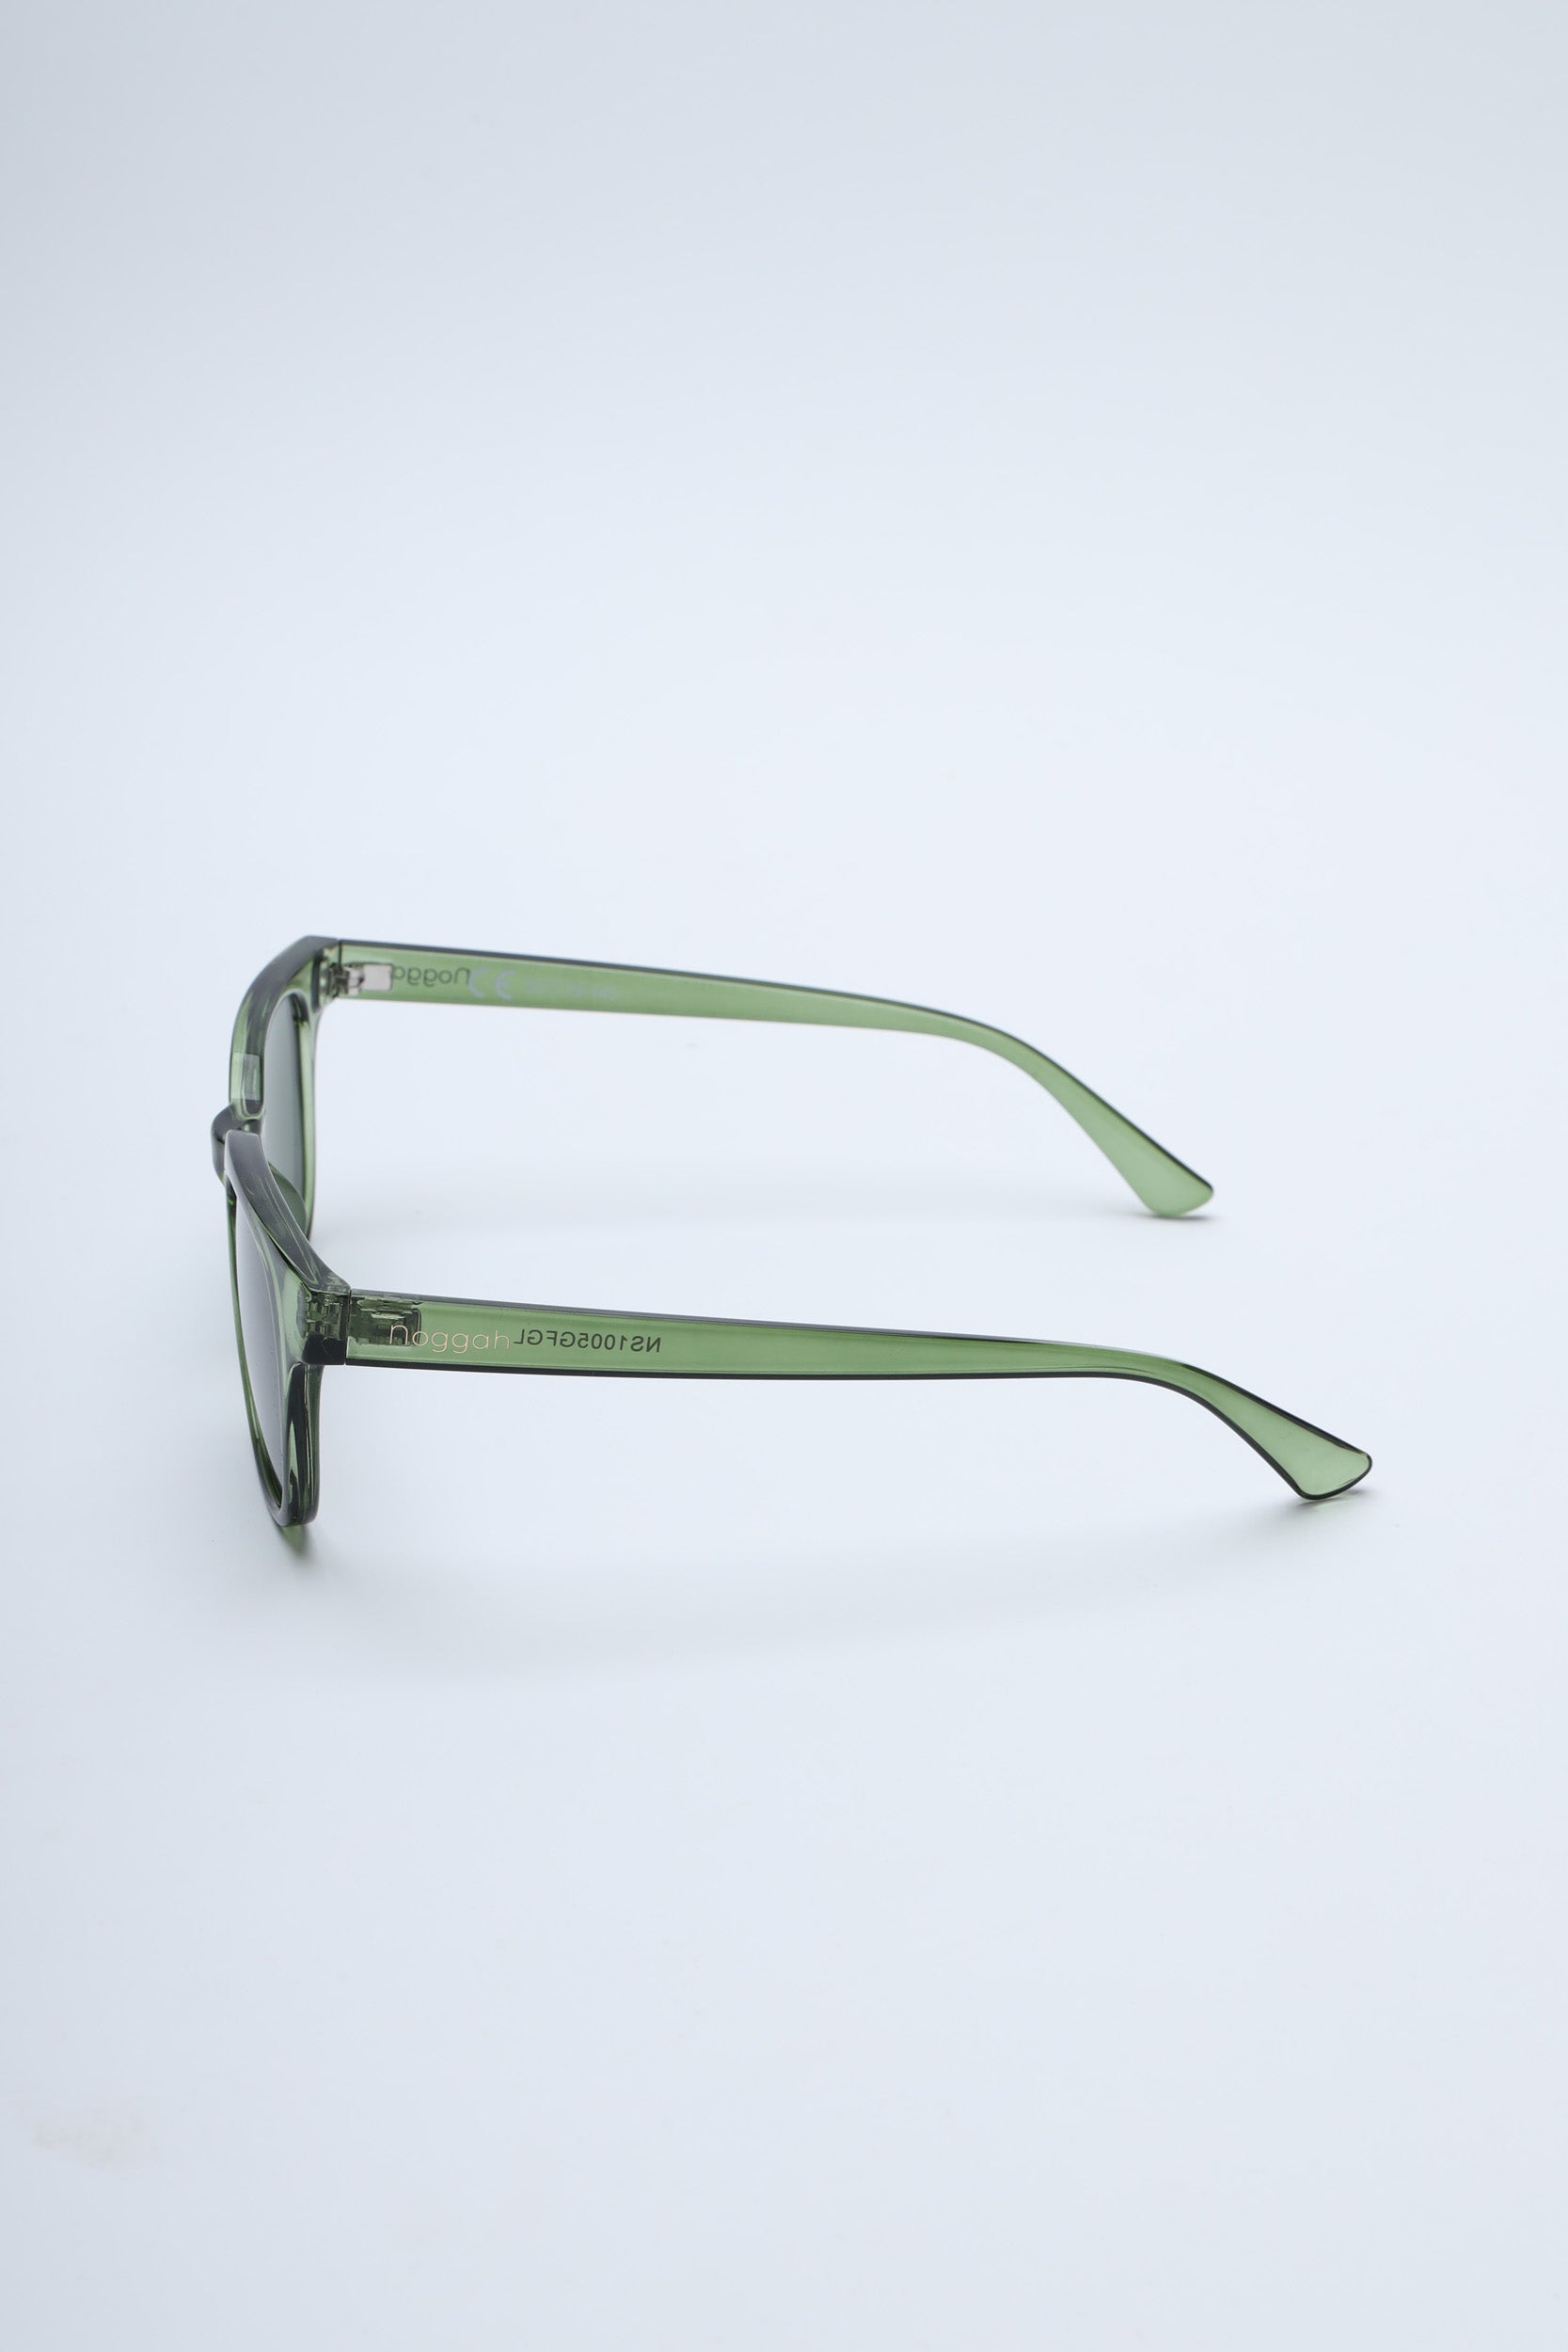 NS2003GFGL Aviator Stainless Steel Gold Frame with Green Glass Lens Sunglasses